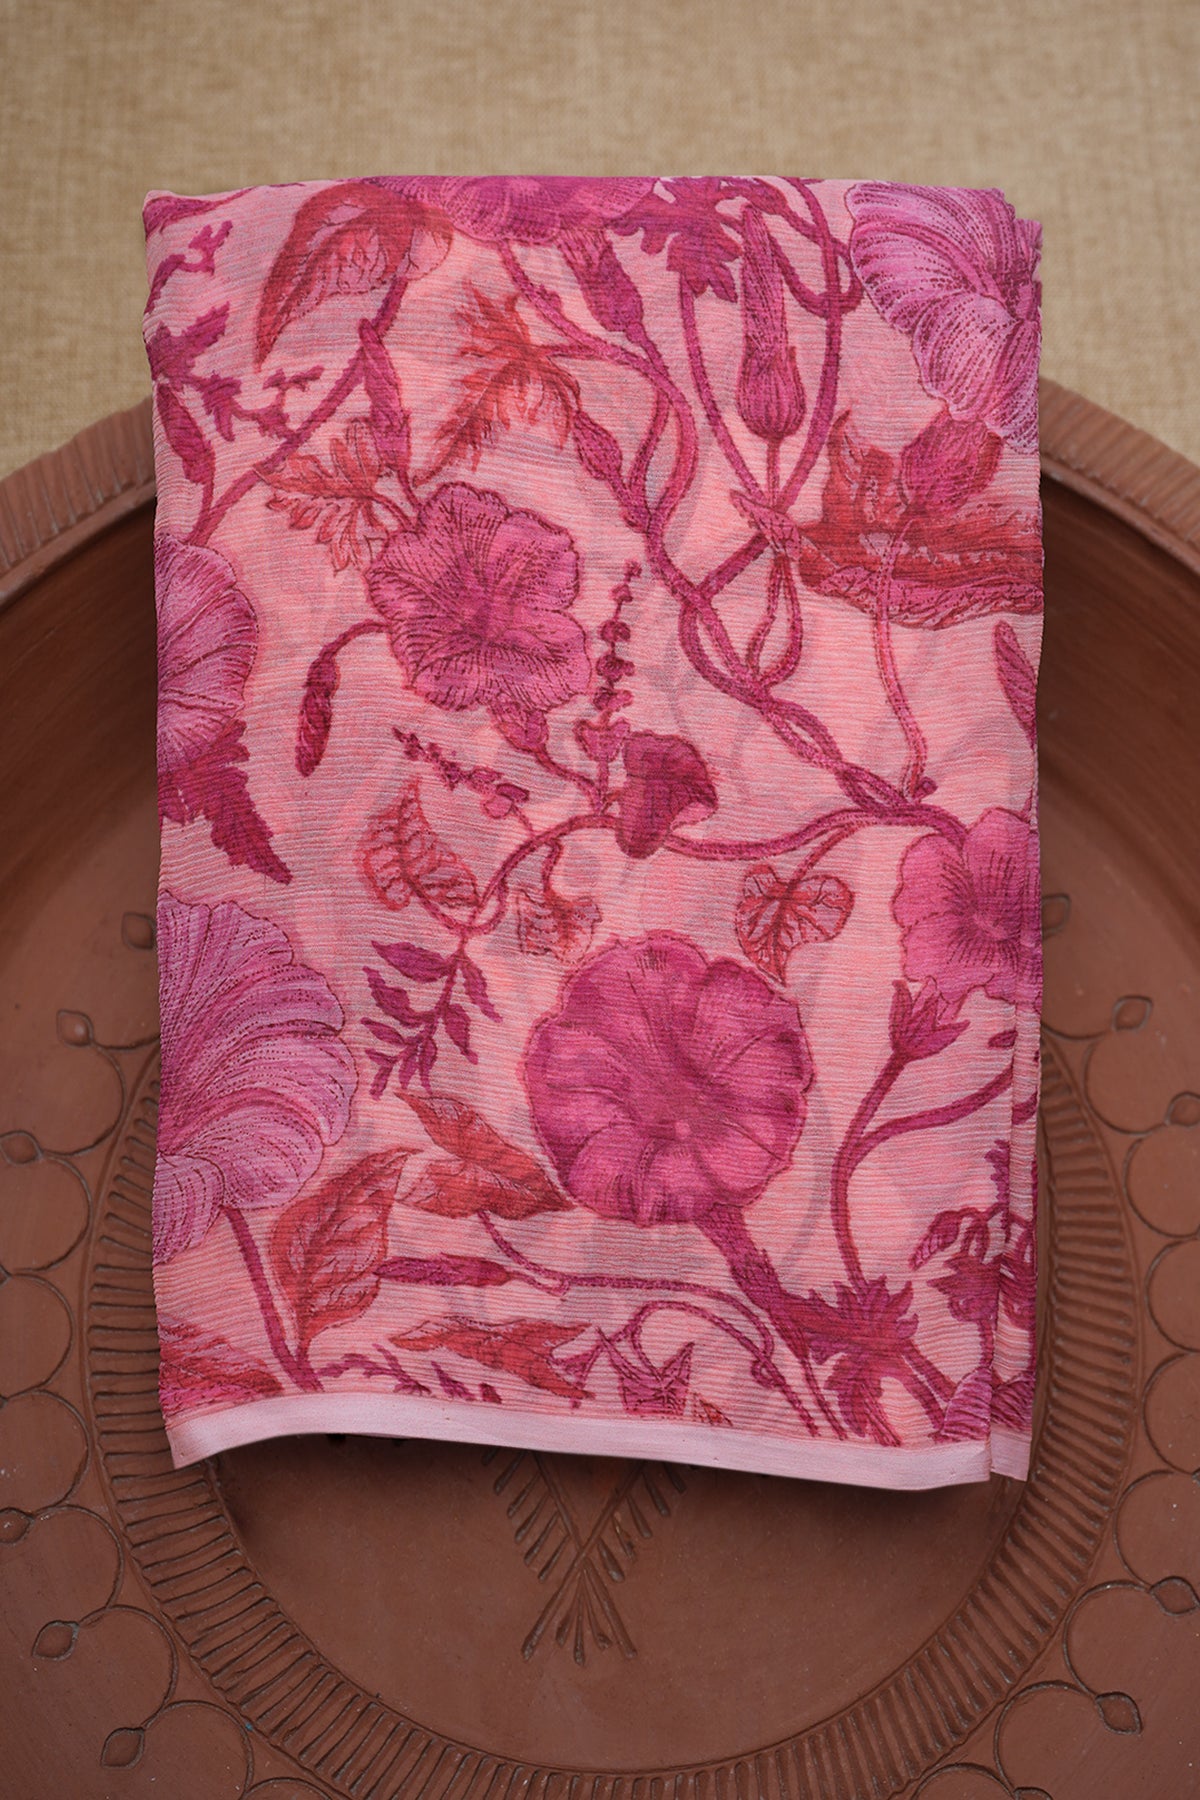 Floral Design Printed Coral Pink Chiffon Saree